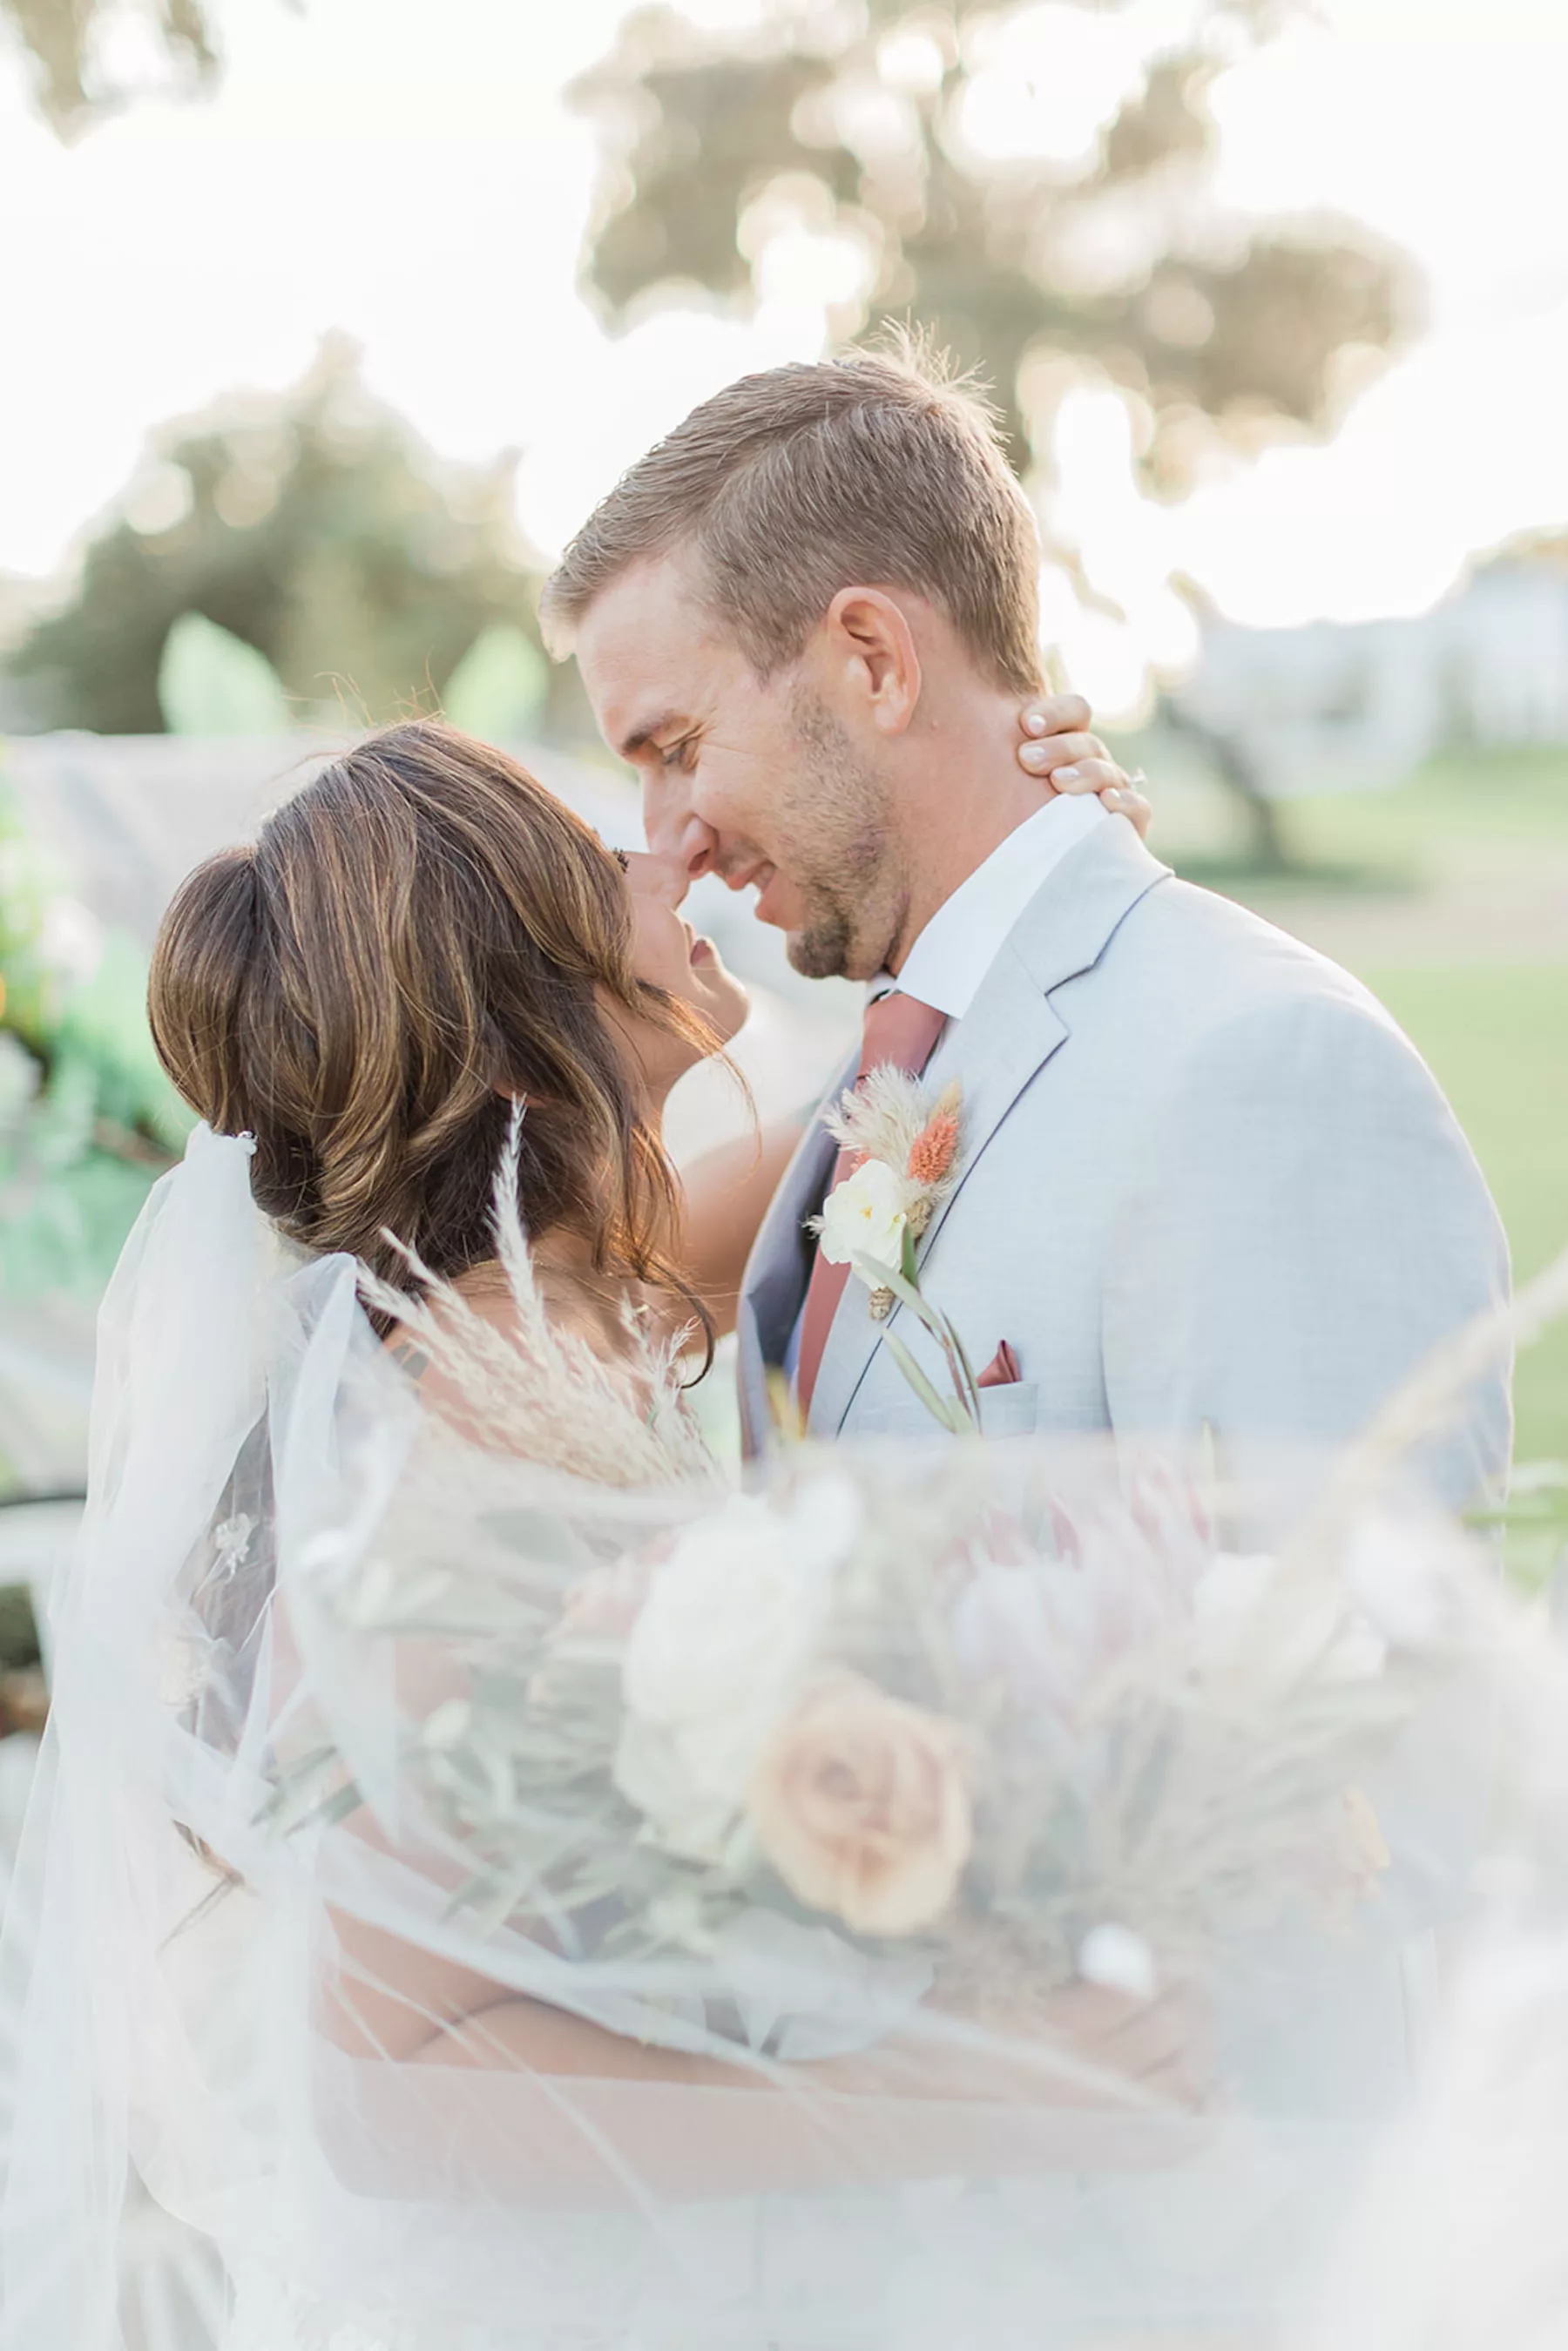 Romantic Bride and Groom Just Married Wedding Portrait | Tampa Wedding Planner B Eventful